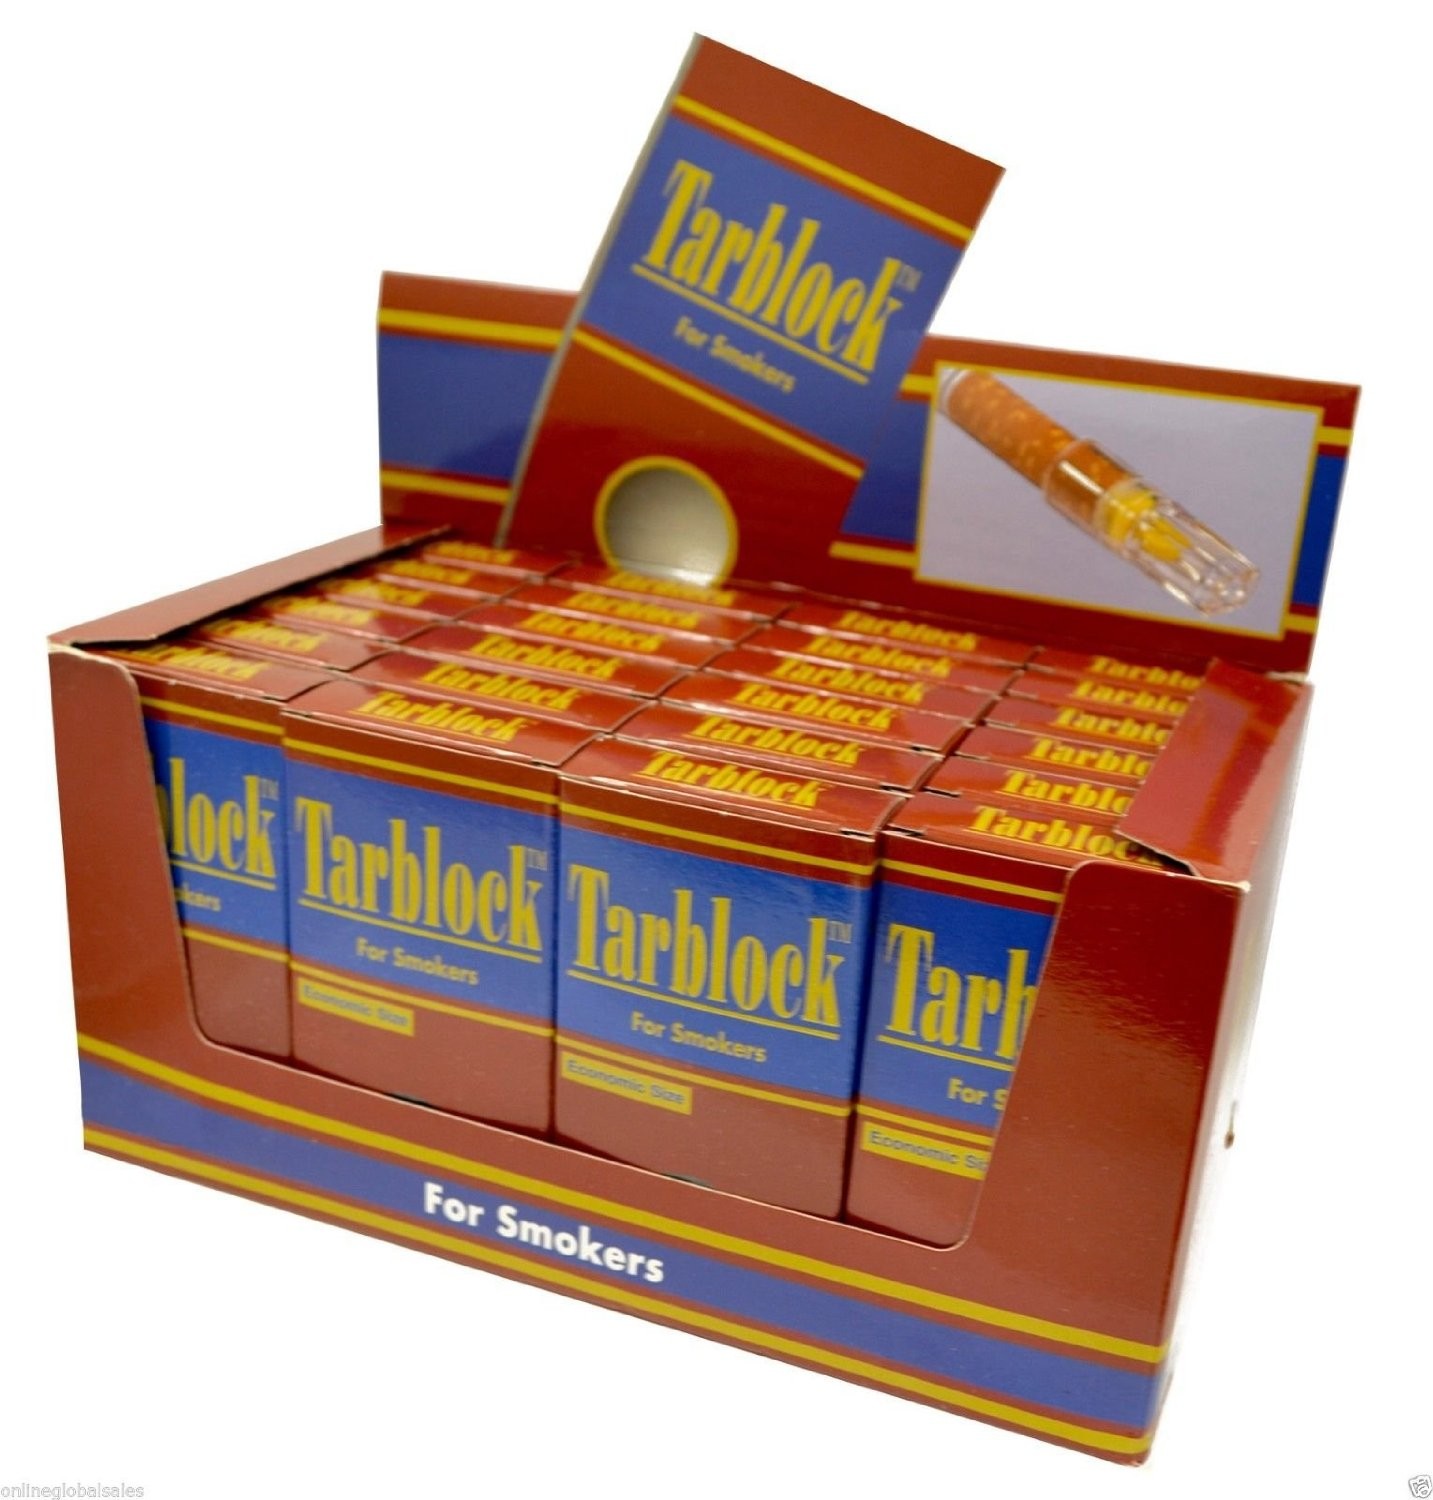 Tarblock Cigarette Filters 48 packs (1440 filter tips)